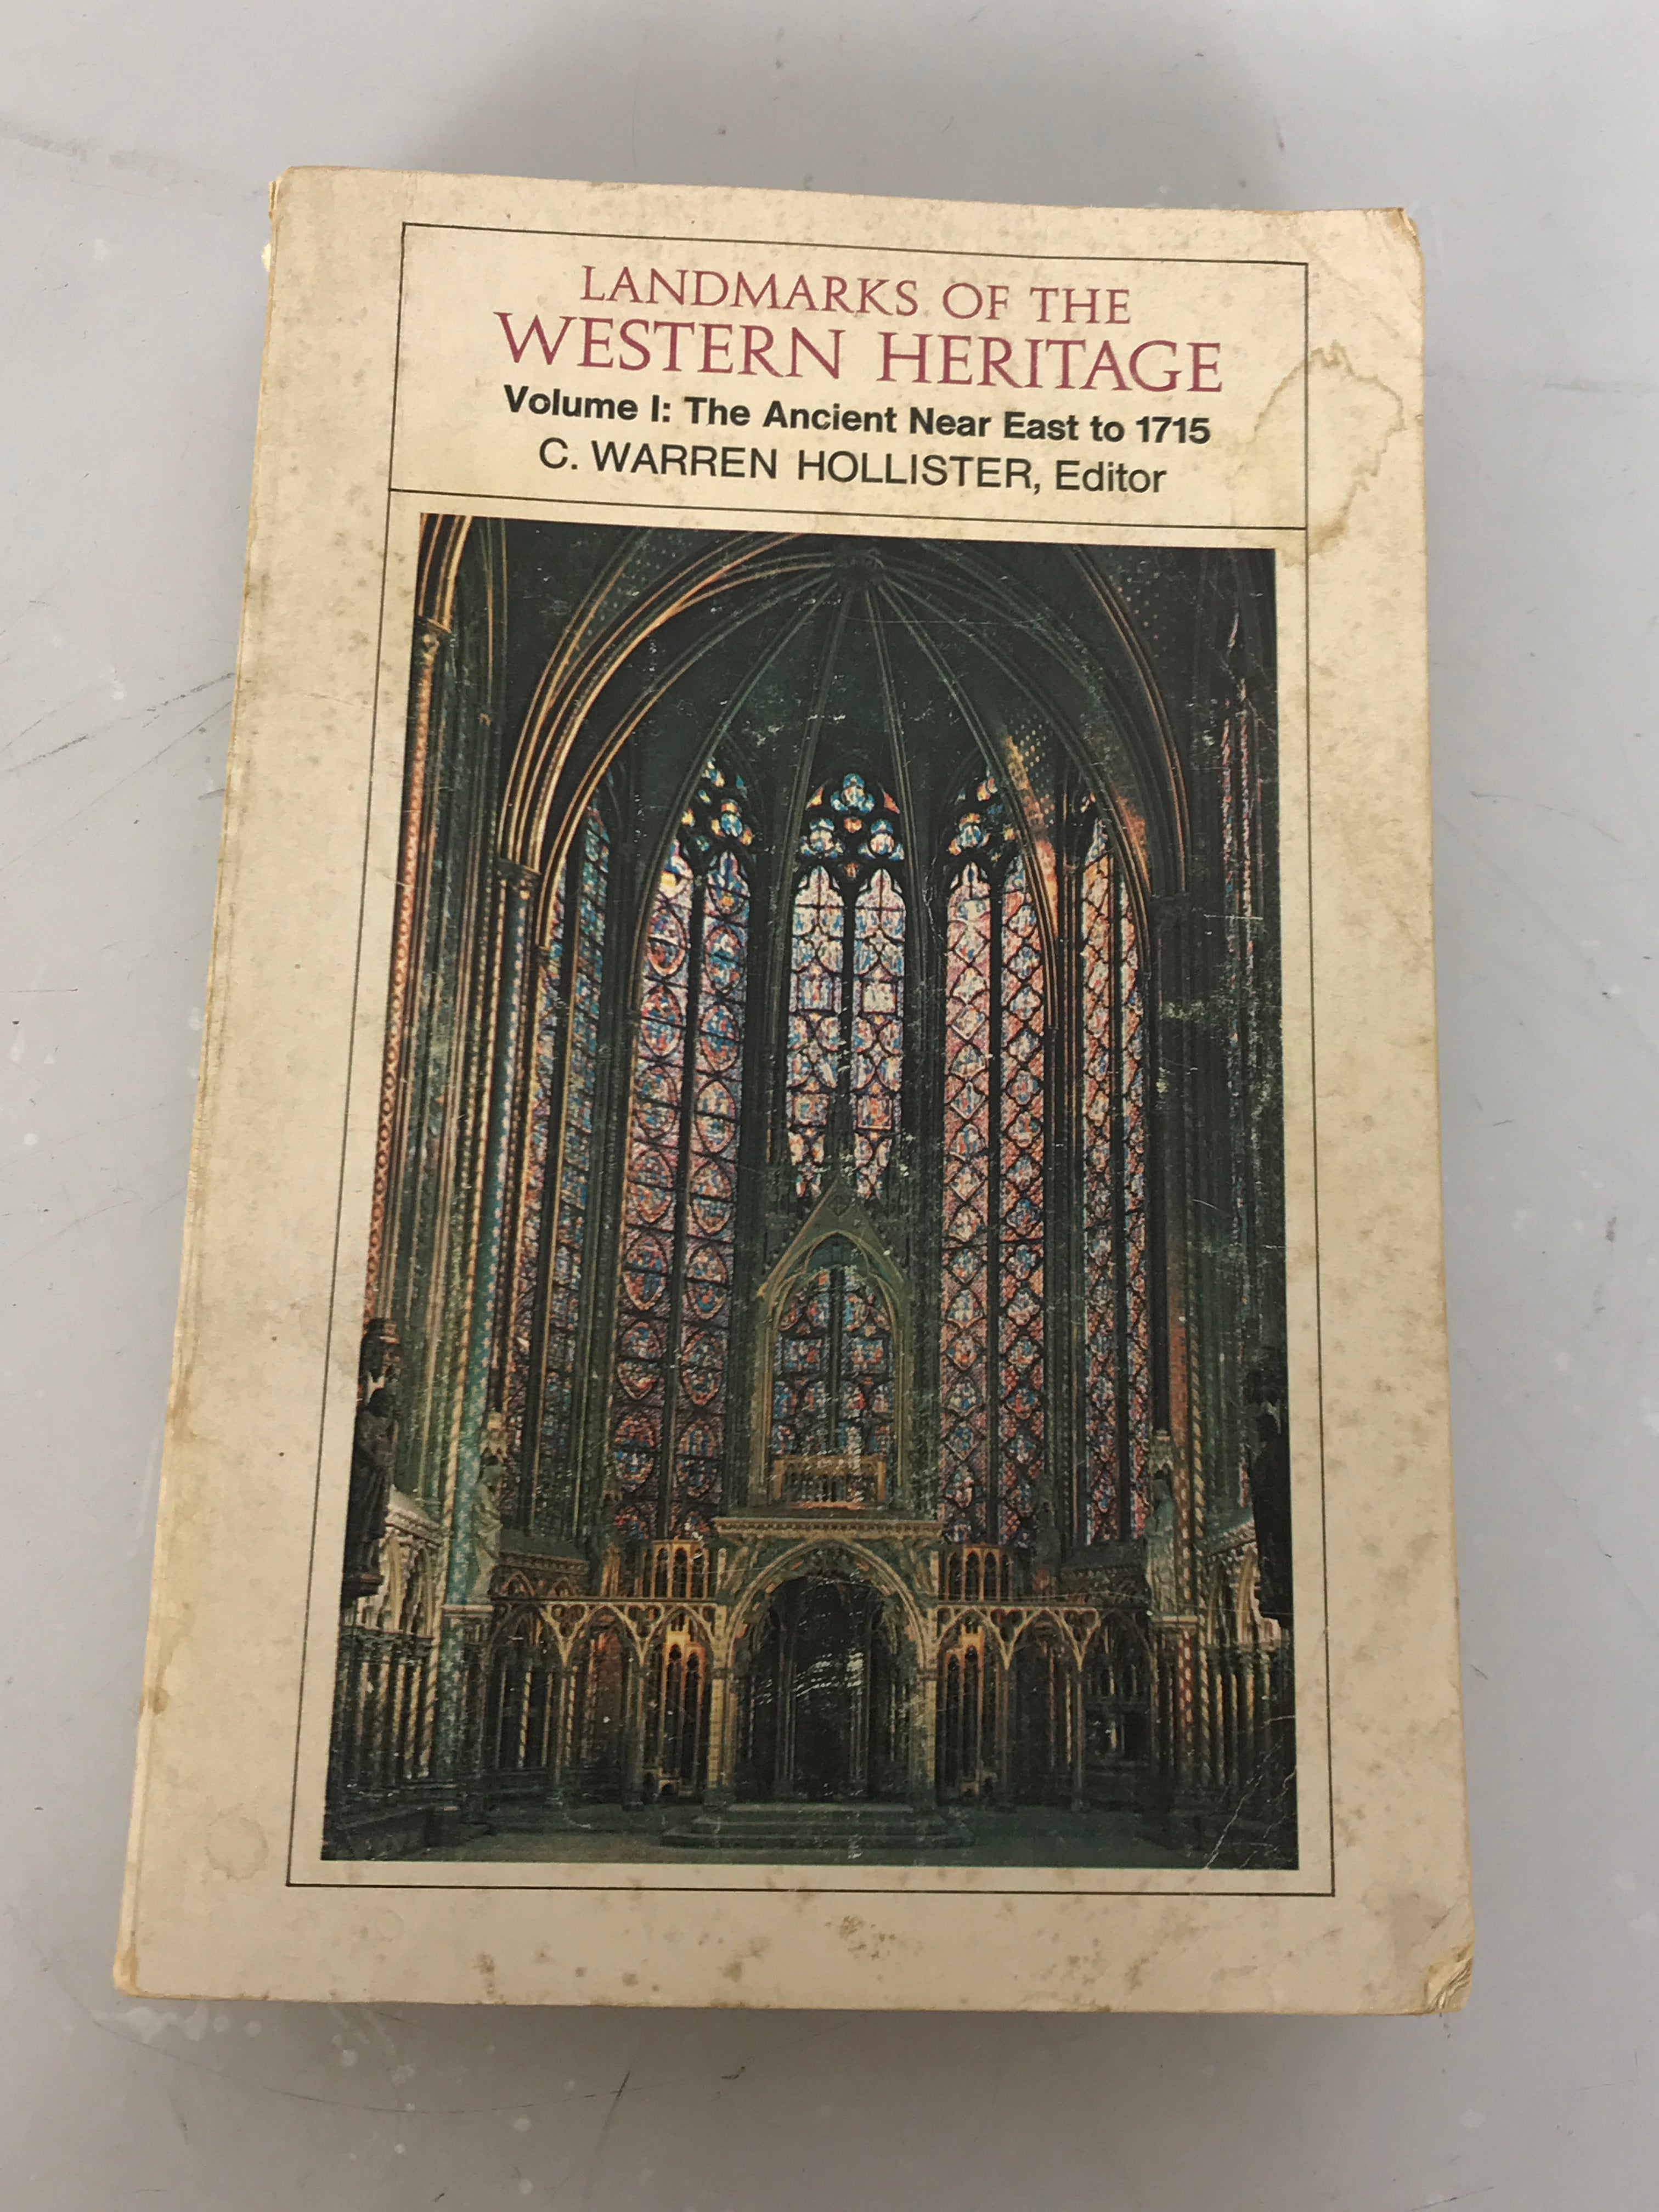 Landmarks of the Western Heritage Volume I by C. Warren Hollister 1968 SC